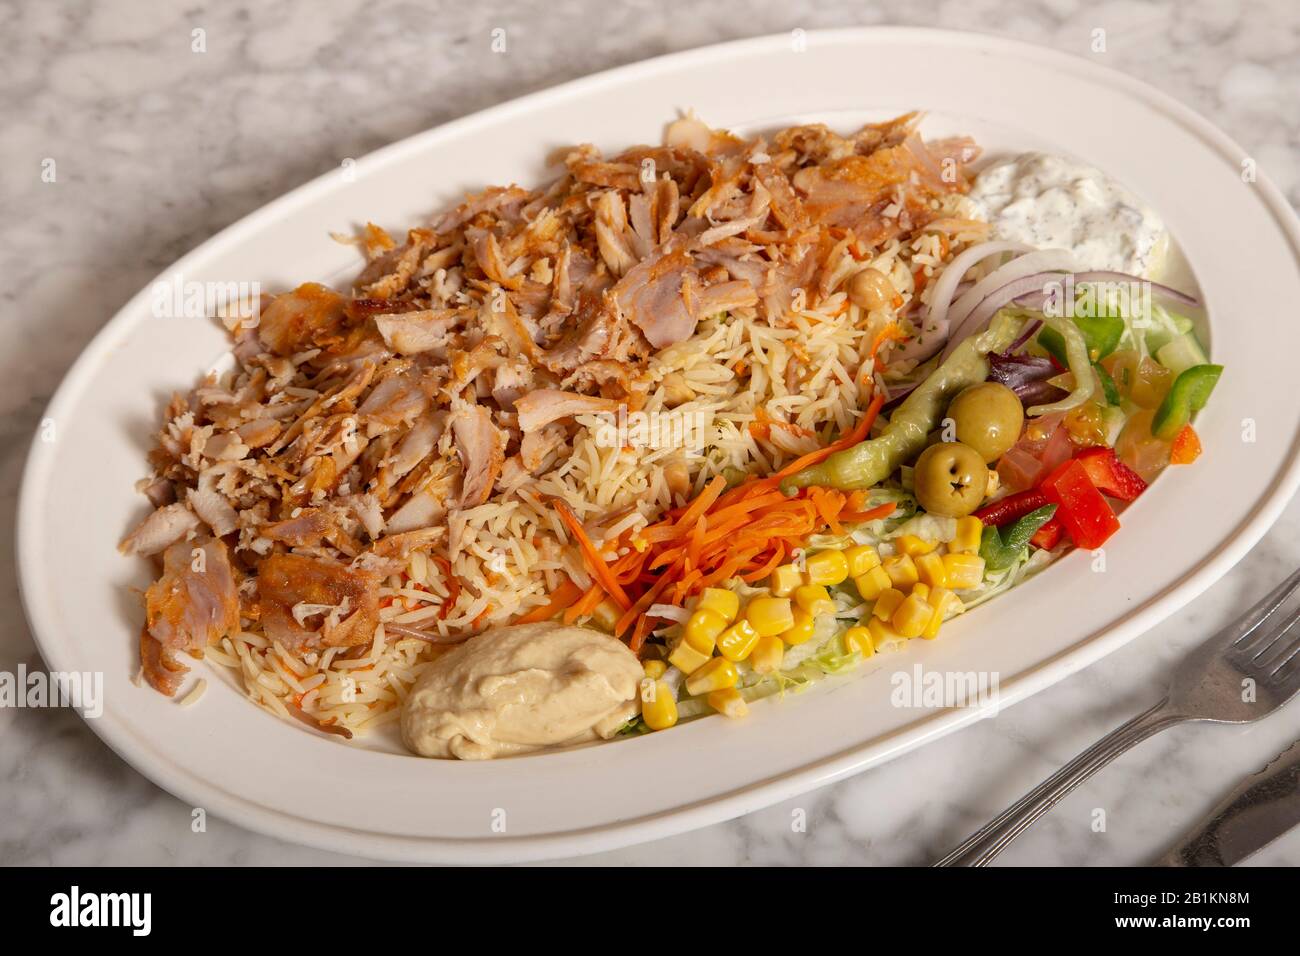 Turkish food dish. Rice with meat Chicken kebab, hummus fries and salad. Stock Photo